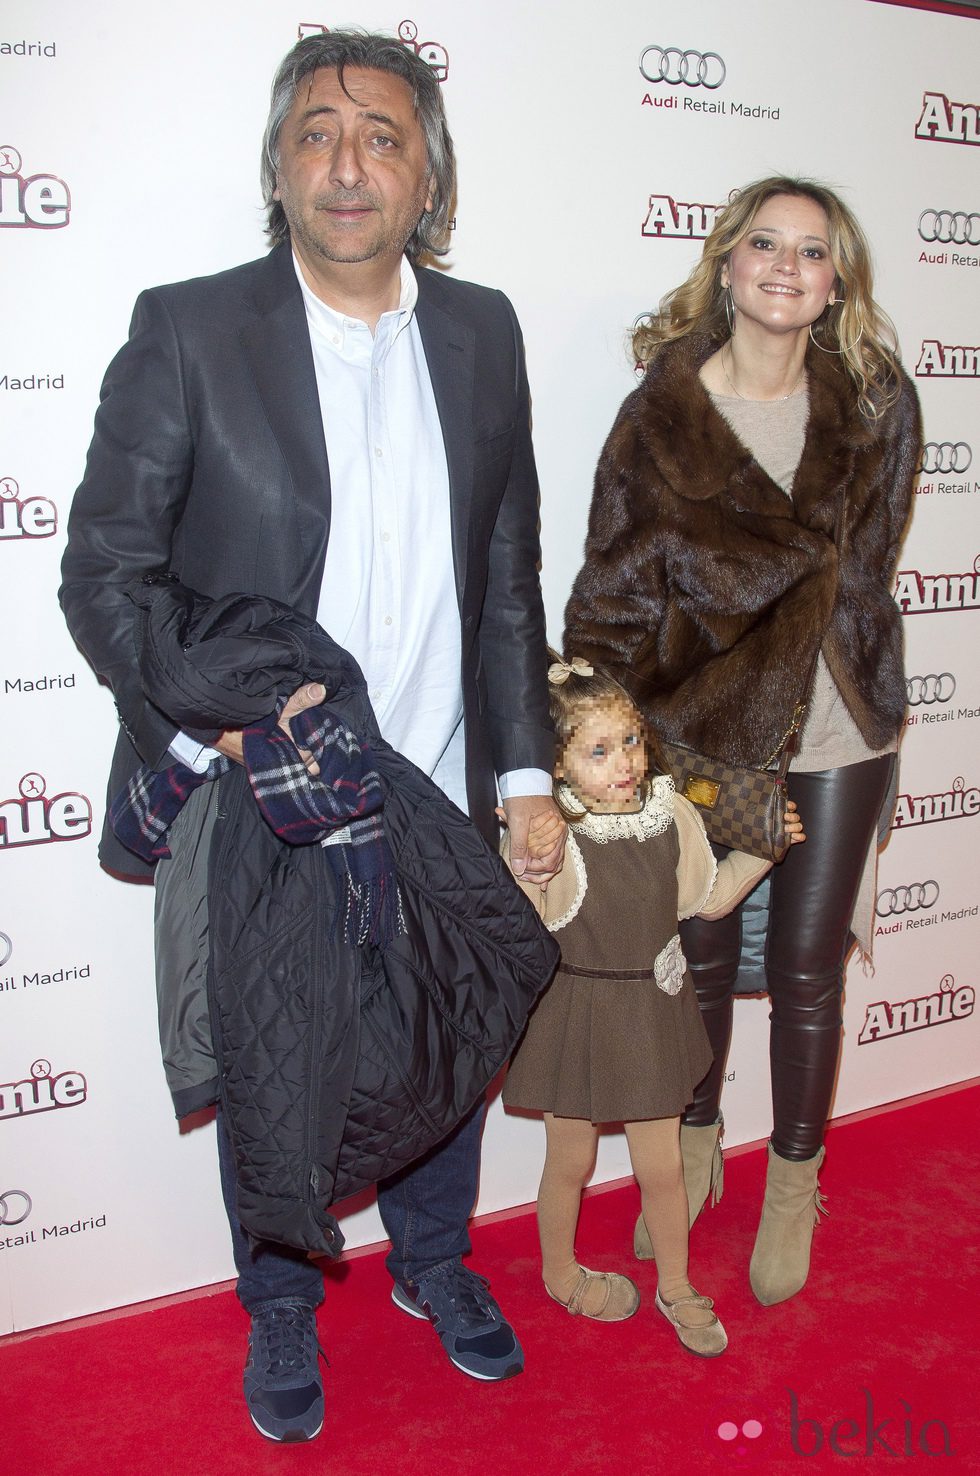 Juan Carmona en la premiere de 'Annie' en Madrid